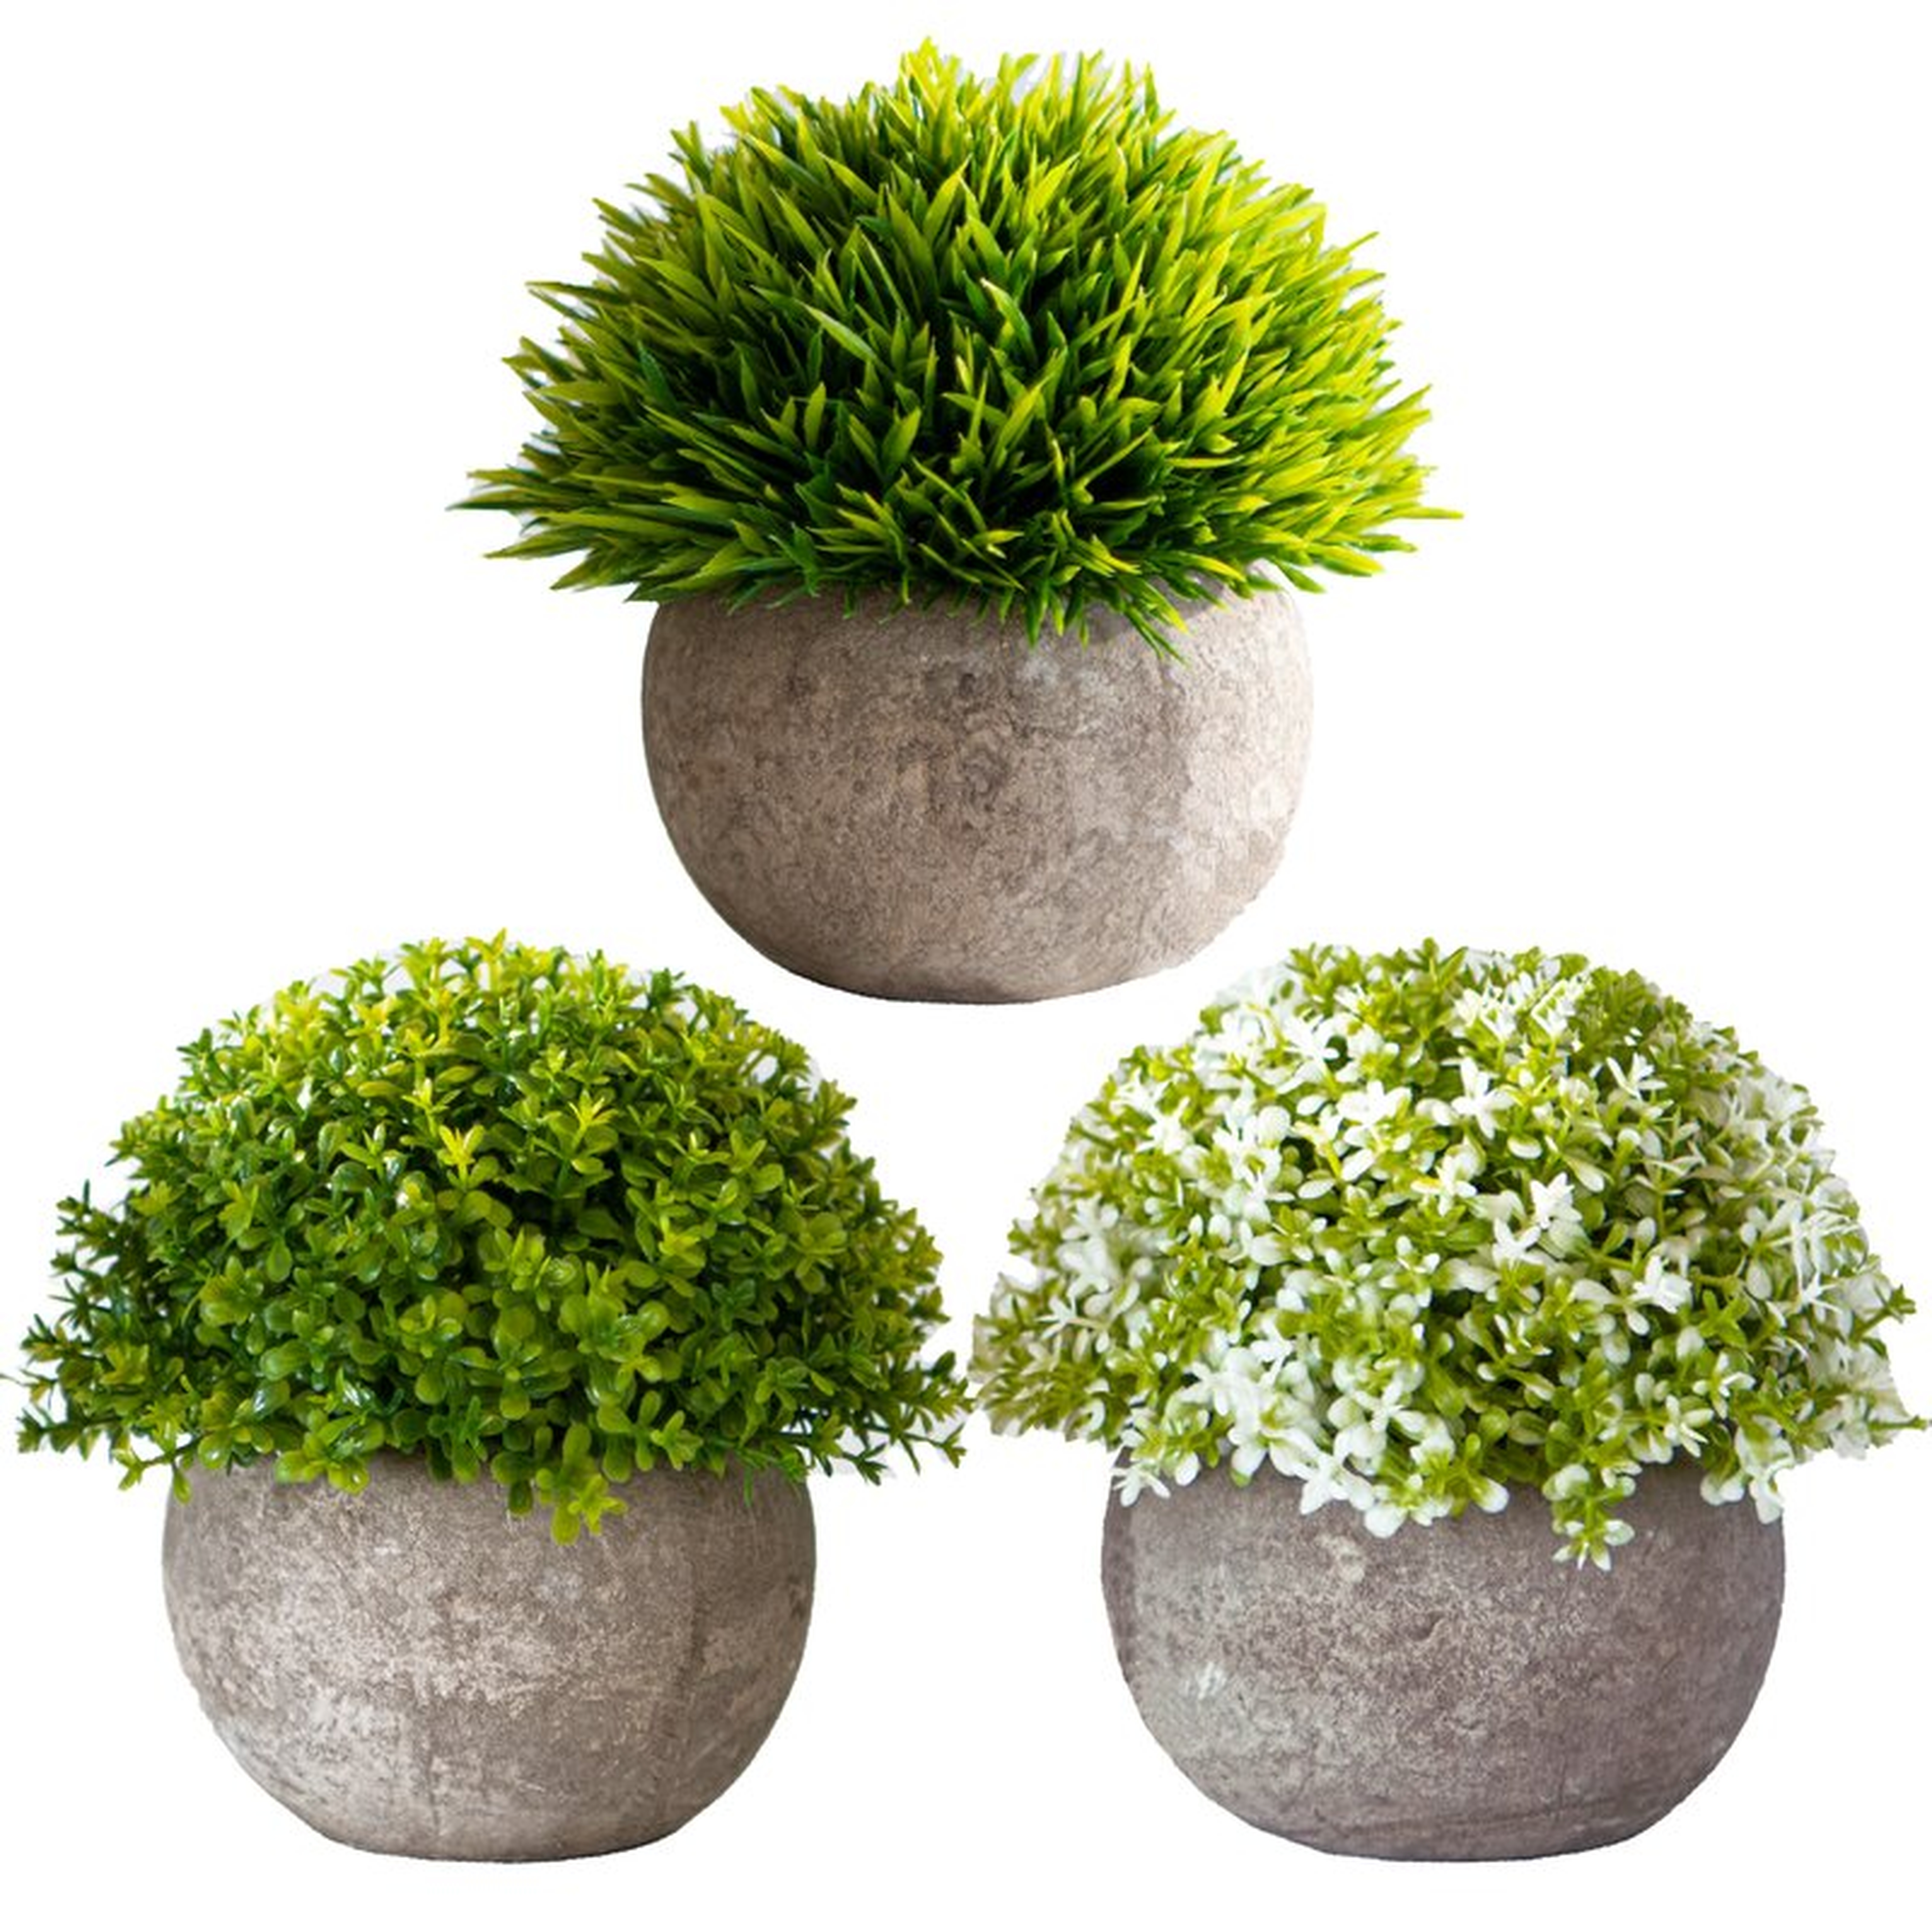 3 Piece Clover Trio Grass in Pot Set - Wayfair